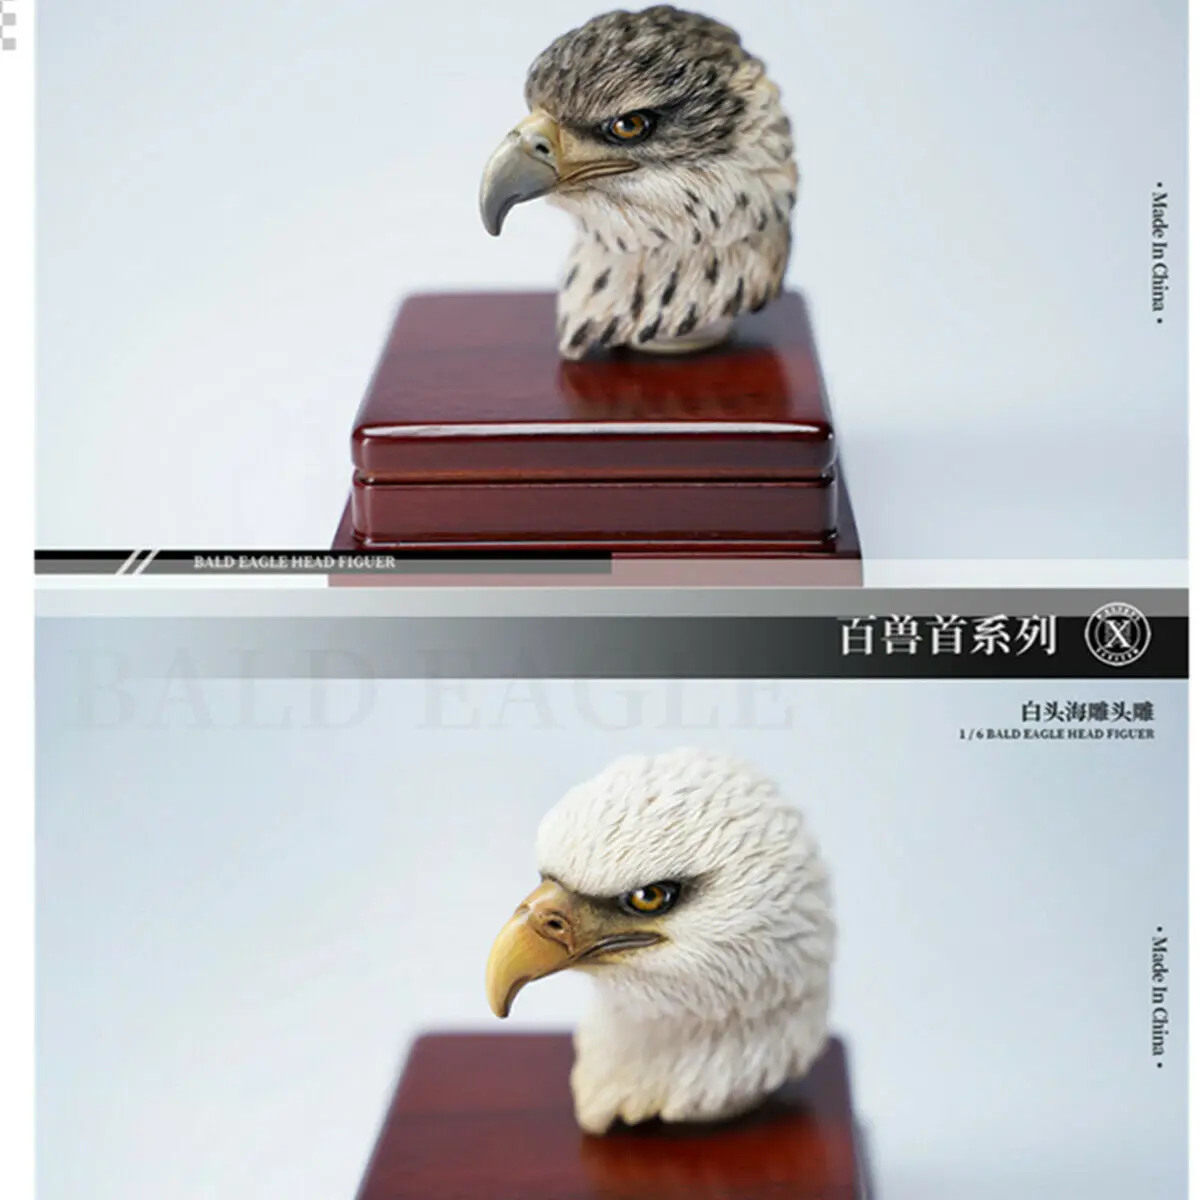 

Mostoys 1/6 Bald Eagle Figure Healing Soldier Model Haliaeetus Leucocephalus Animal Collector Toy Resin Realistic Decor Kid Gift